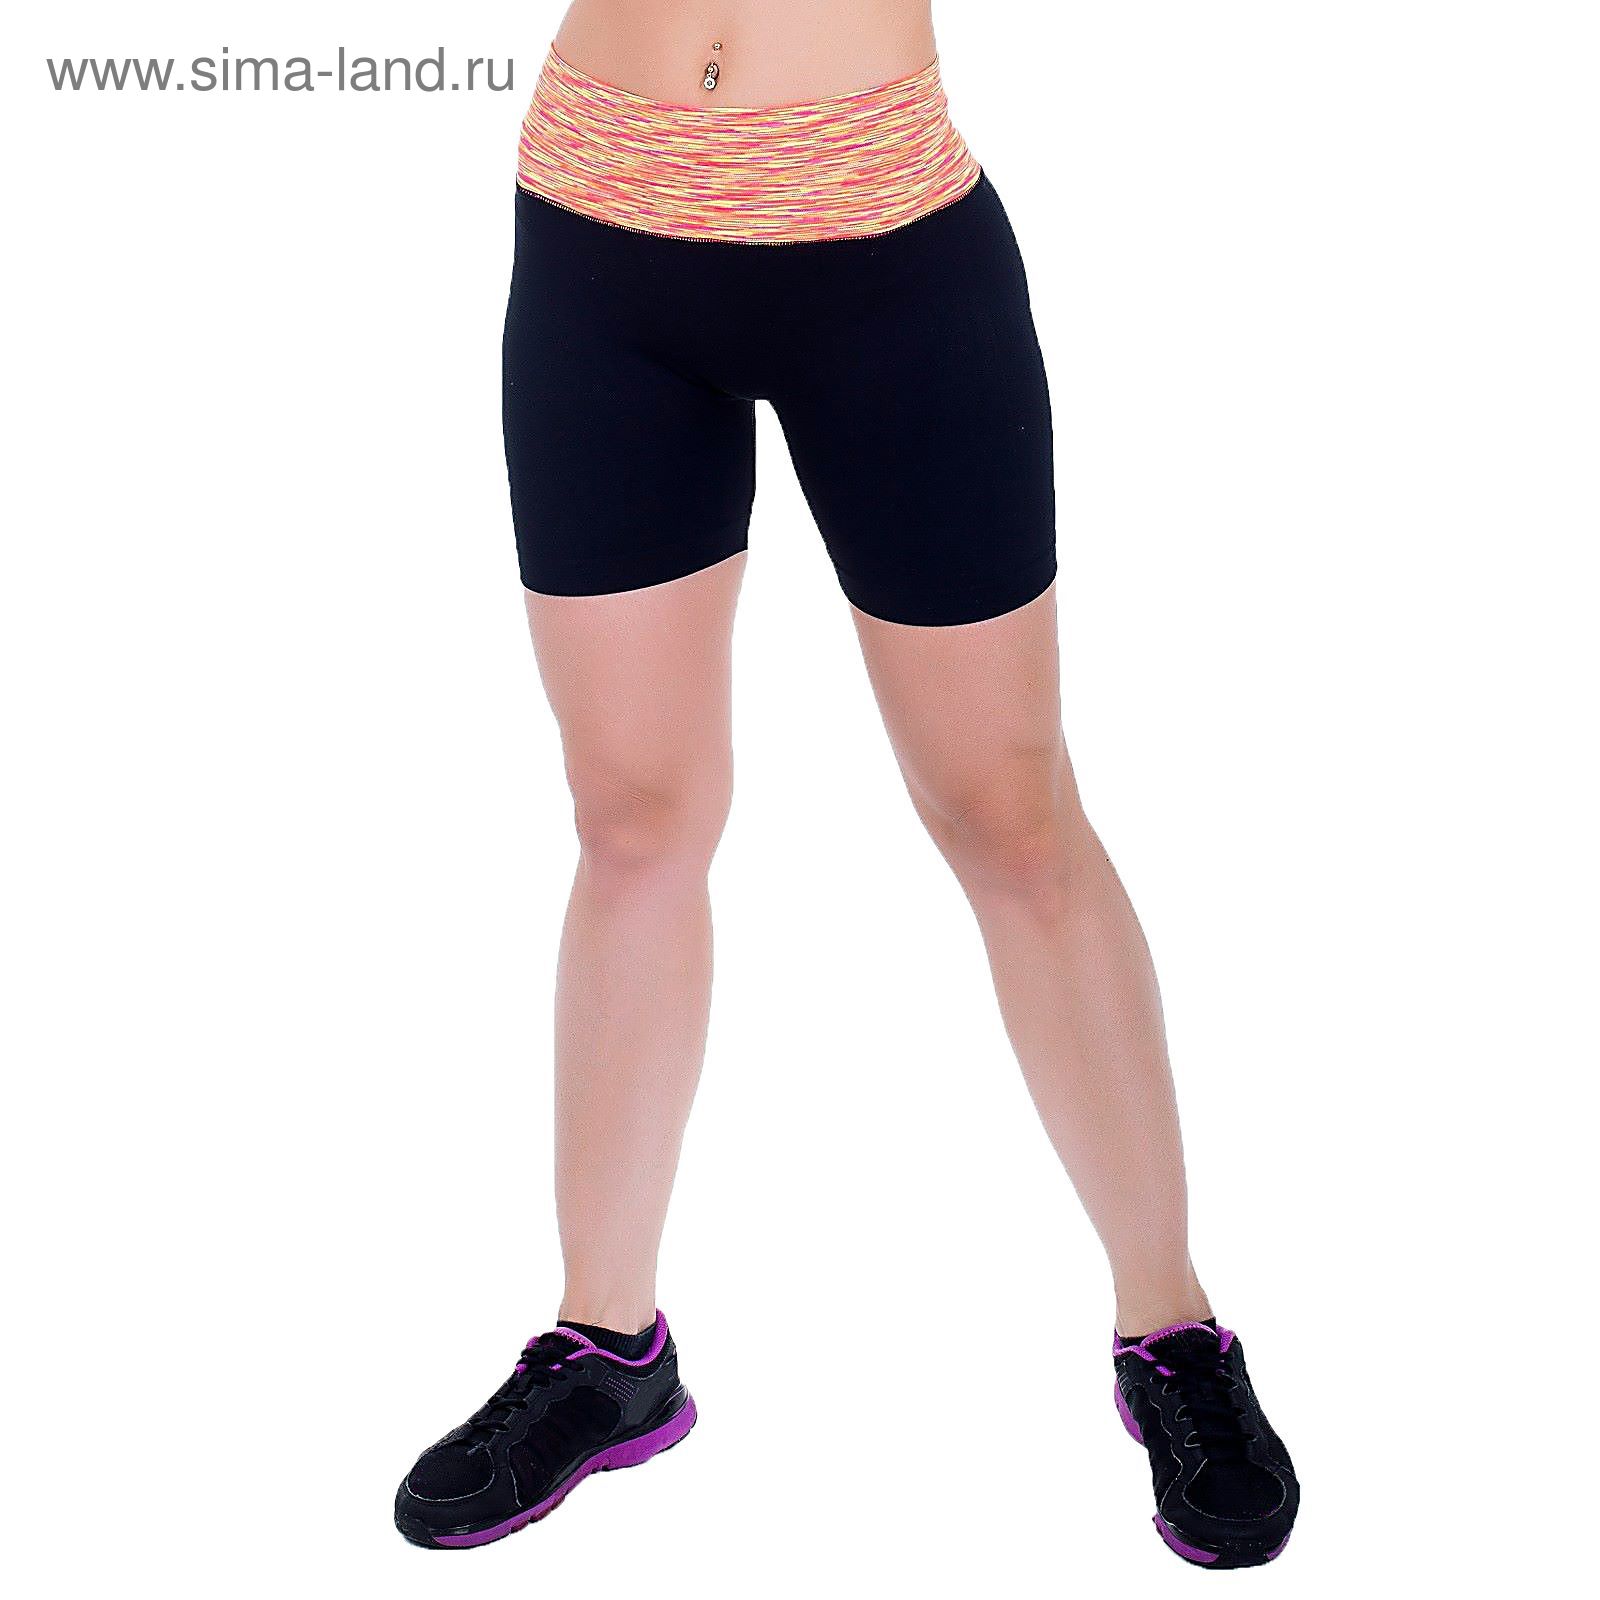 Спортивные шорты ONLITOP Fitness time coral, размер S-M (42-44)